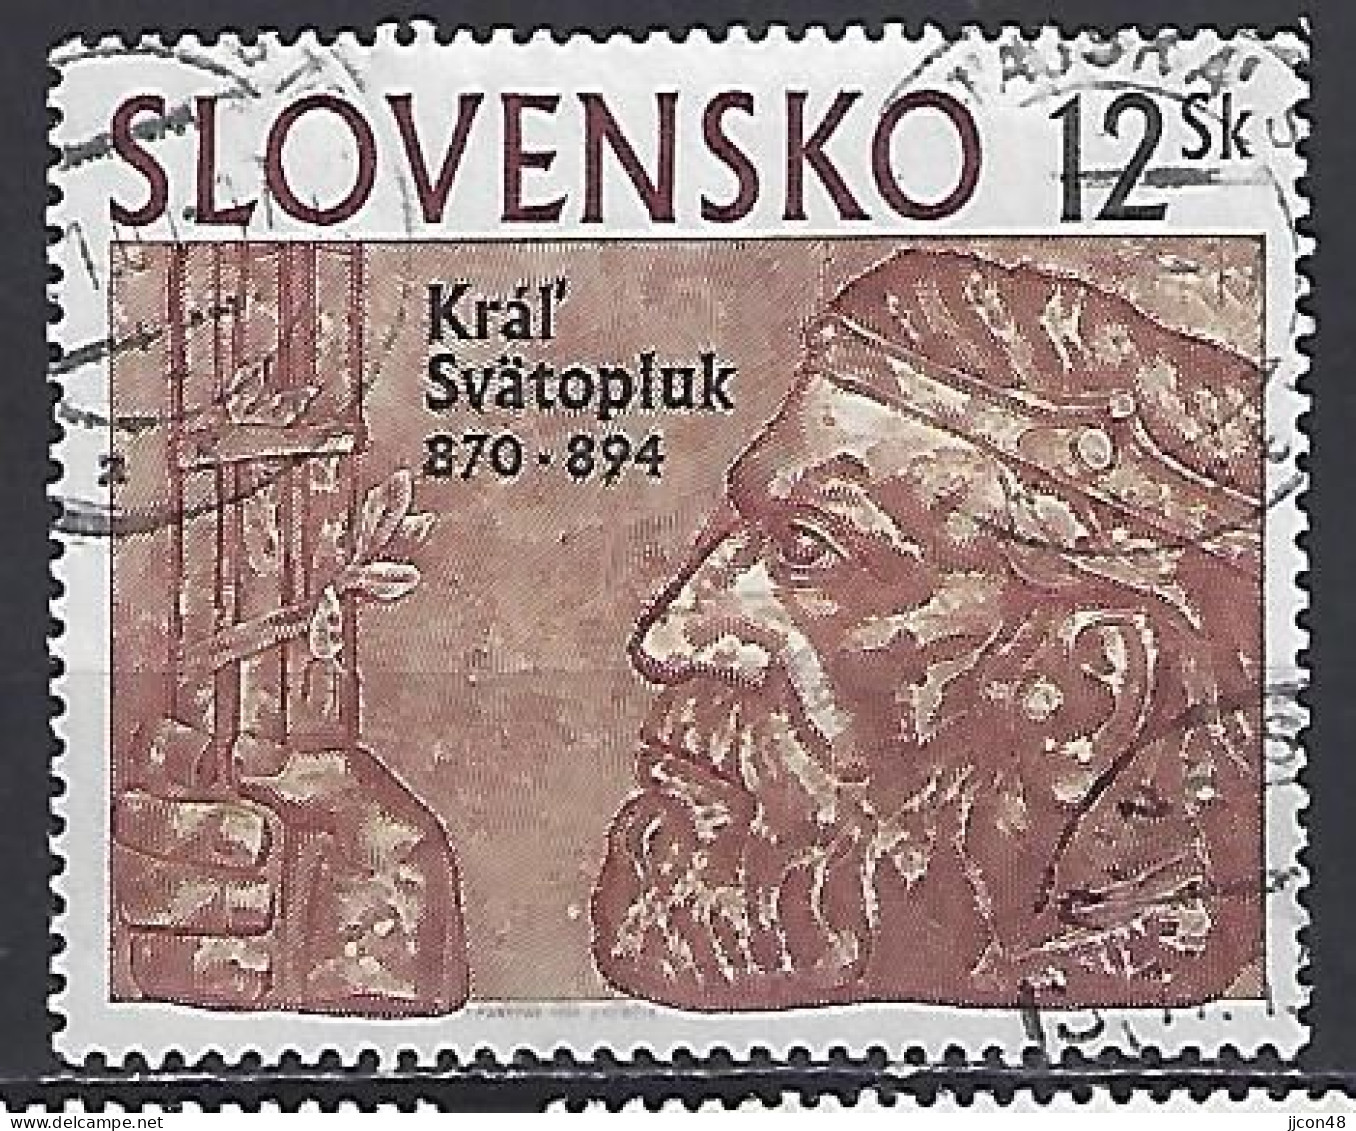 Slovakia 1994  King Swatopluk (o) Mi.198 - Used Stamps